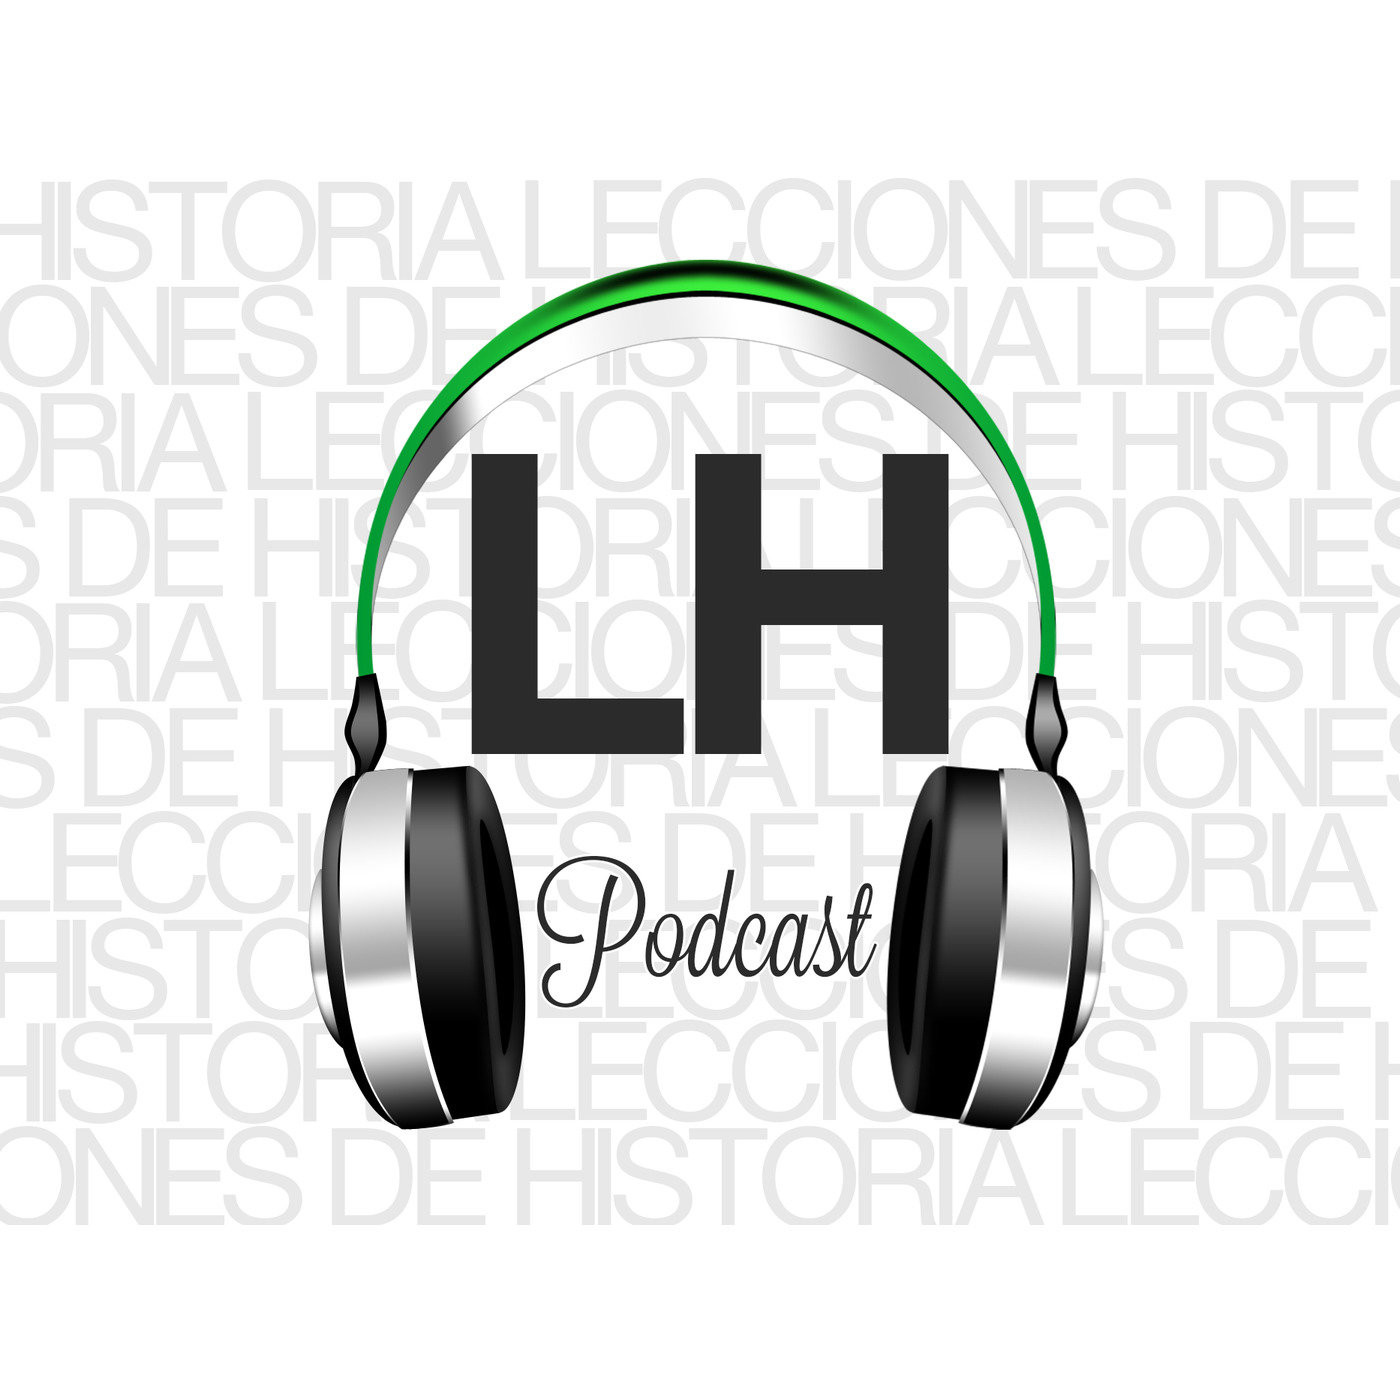 LeccionesdeHistora Podcast